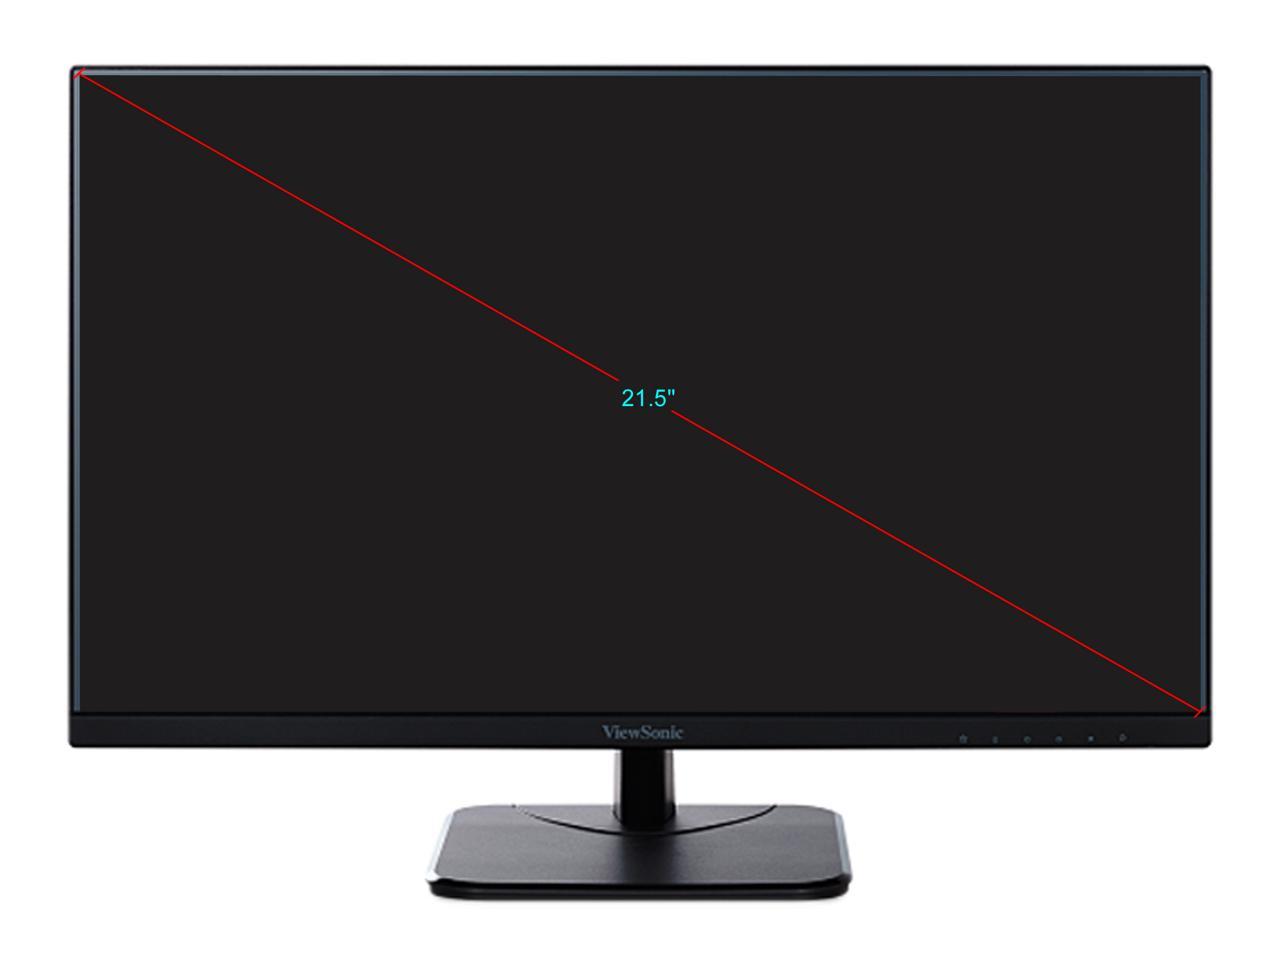 ViewSonic VA2256-MHD 22" (Actual size 21.5") Full HD 1920 x 1080 7ms HDMI VGA DisplayPort Built-in Speakers Flicker-Free Blue-Light Filter Anti-Glare Frameless Backlit LED IPS Monitor